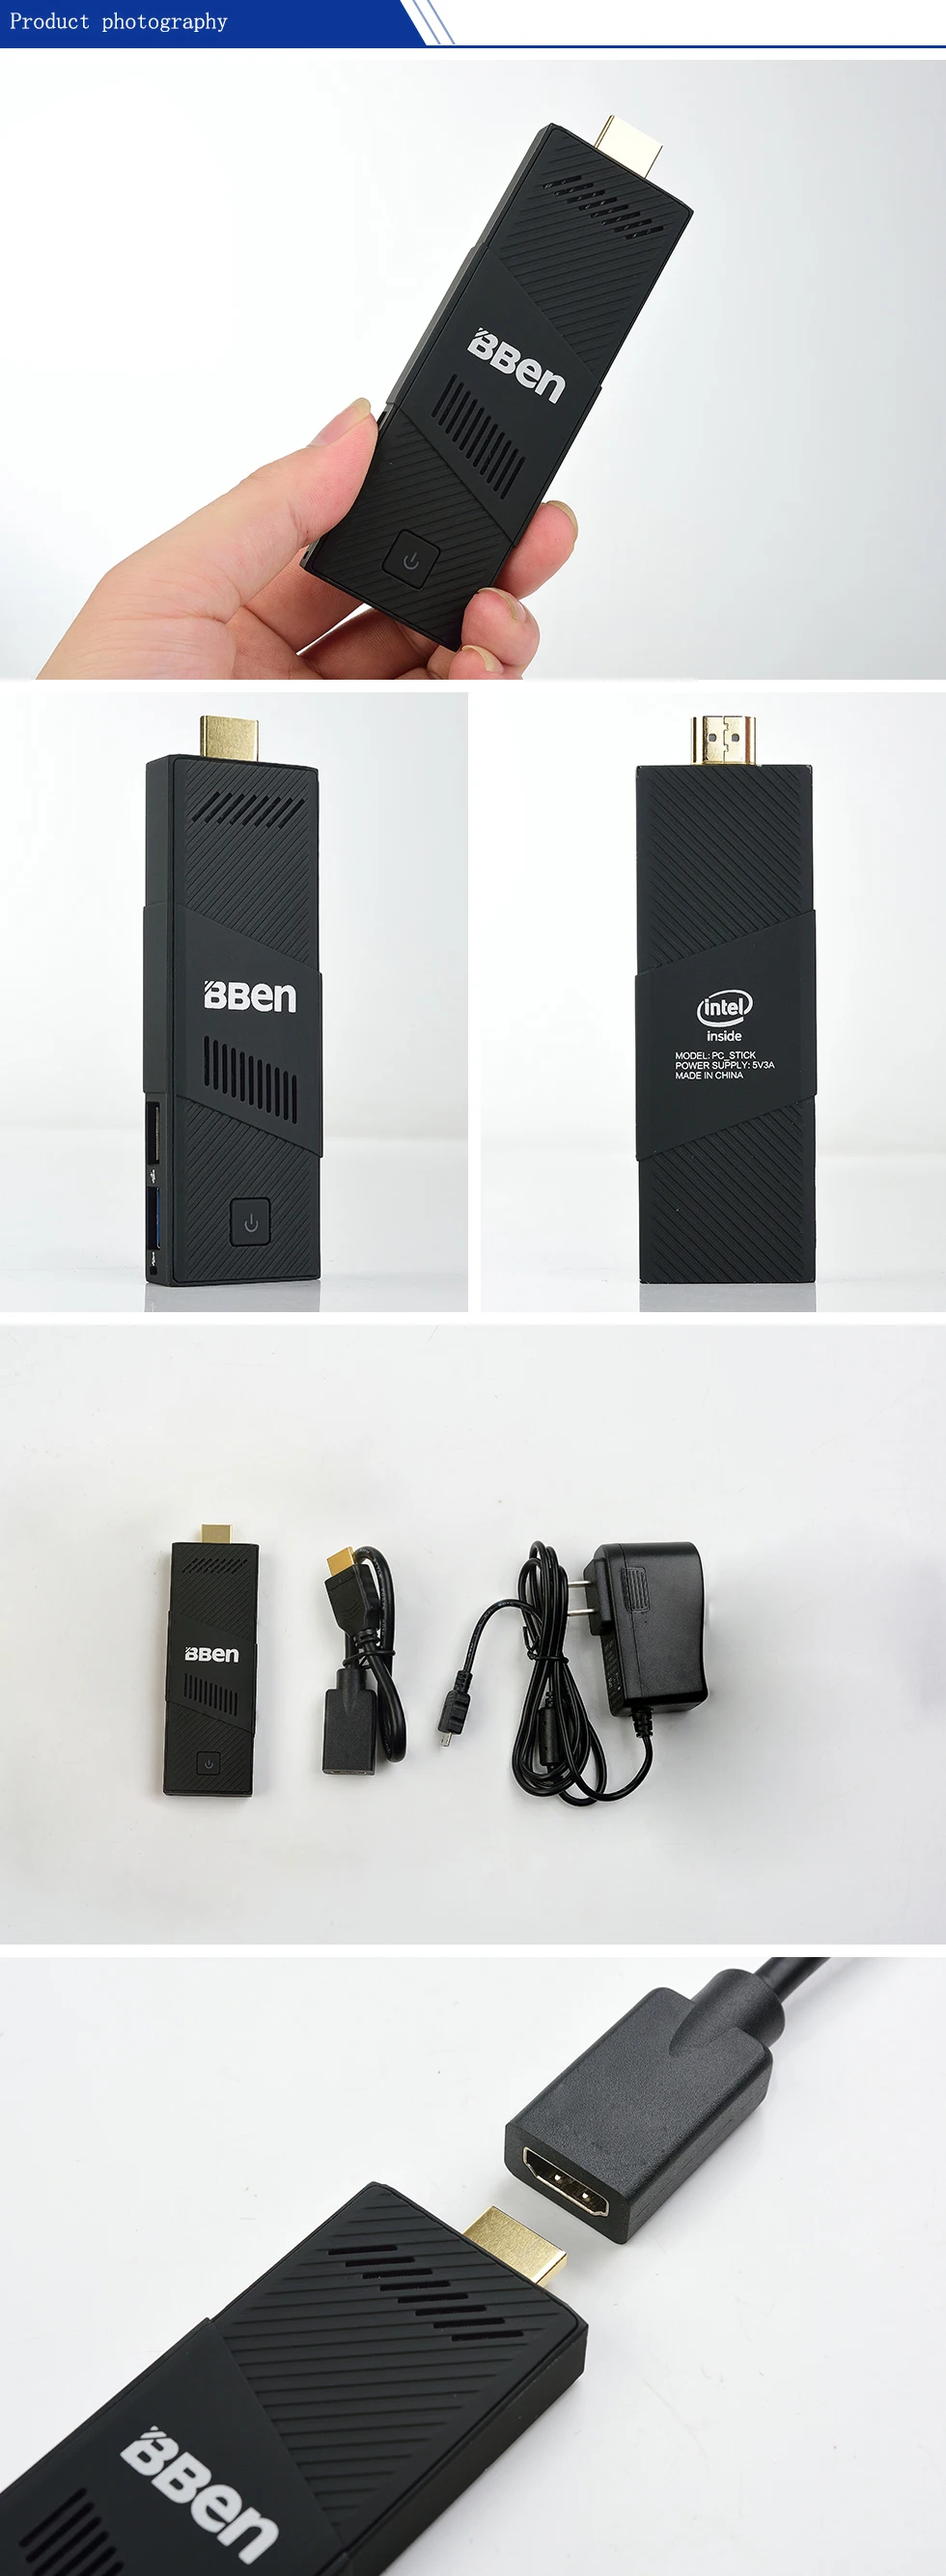 Bben MN9 вентилятор intel mini pc windows10, 4 ГБ Оперативная память + 64 ГБ emmc персональный компьютер mini stick медиаплеера USB3.0 Wi-Fi с US/EU